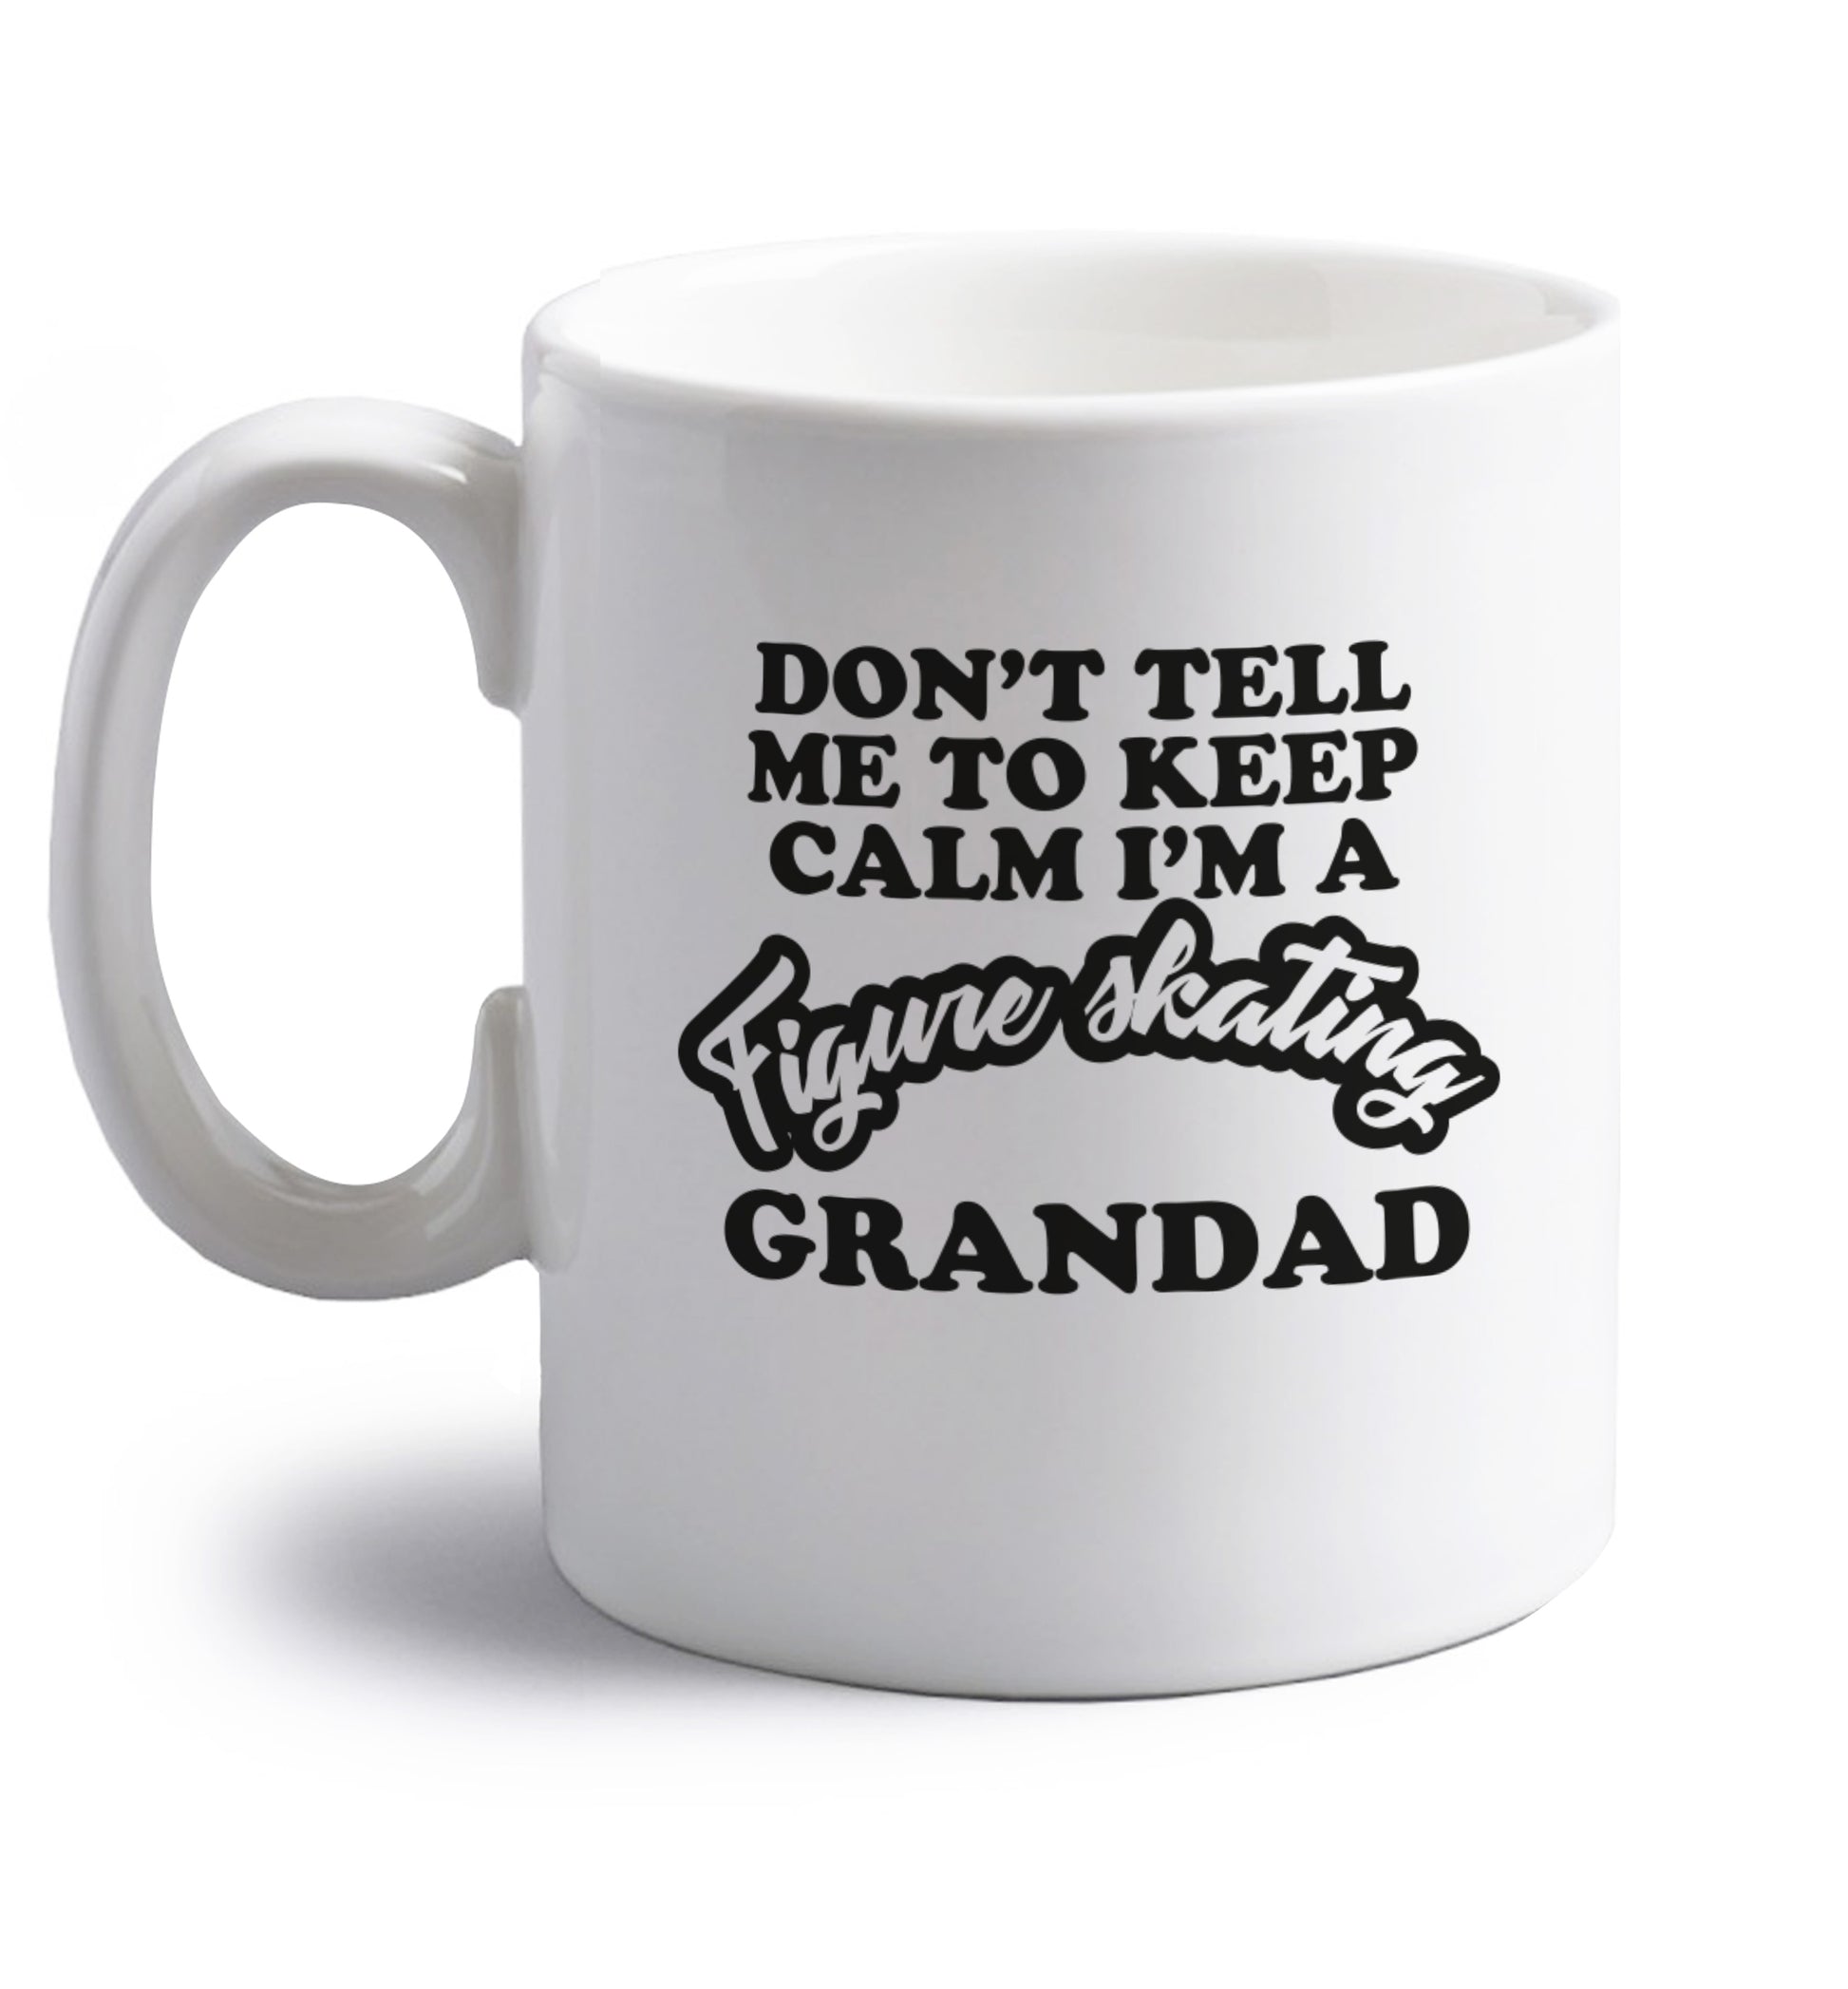 Don't tell me to keep calm I'm a figure skating grandad right handed white ceramic mug 